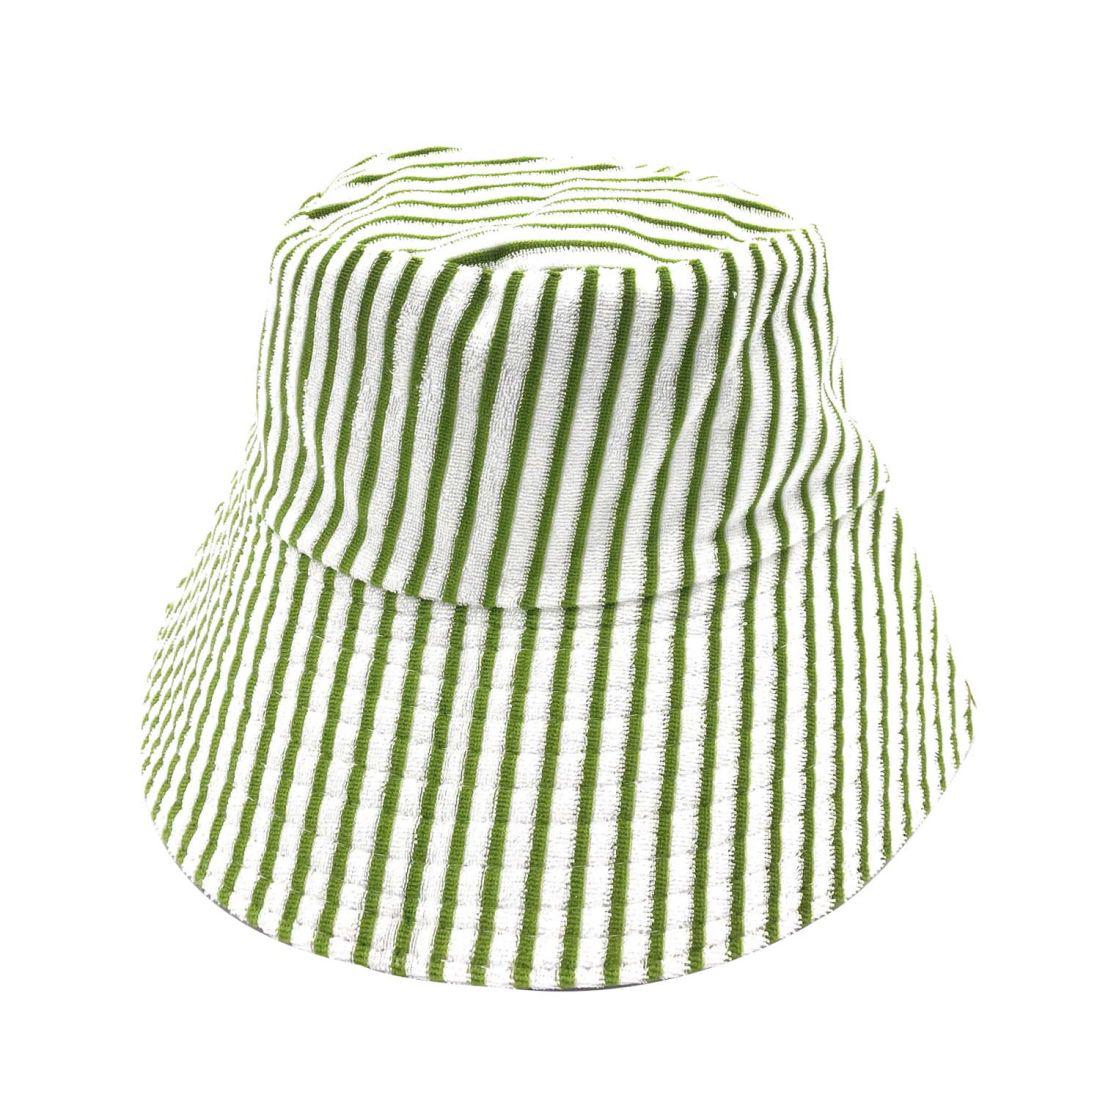 Empire Cove Stripe Terry Cloth Bucket Hat Fisherman Cap Women Men Summer Sun Hat 